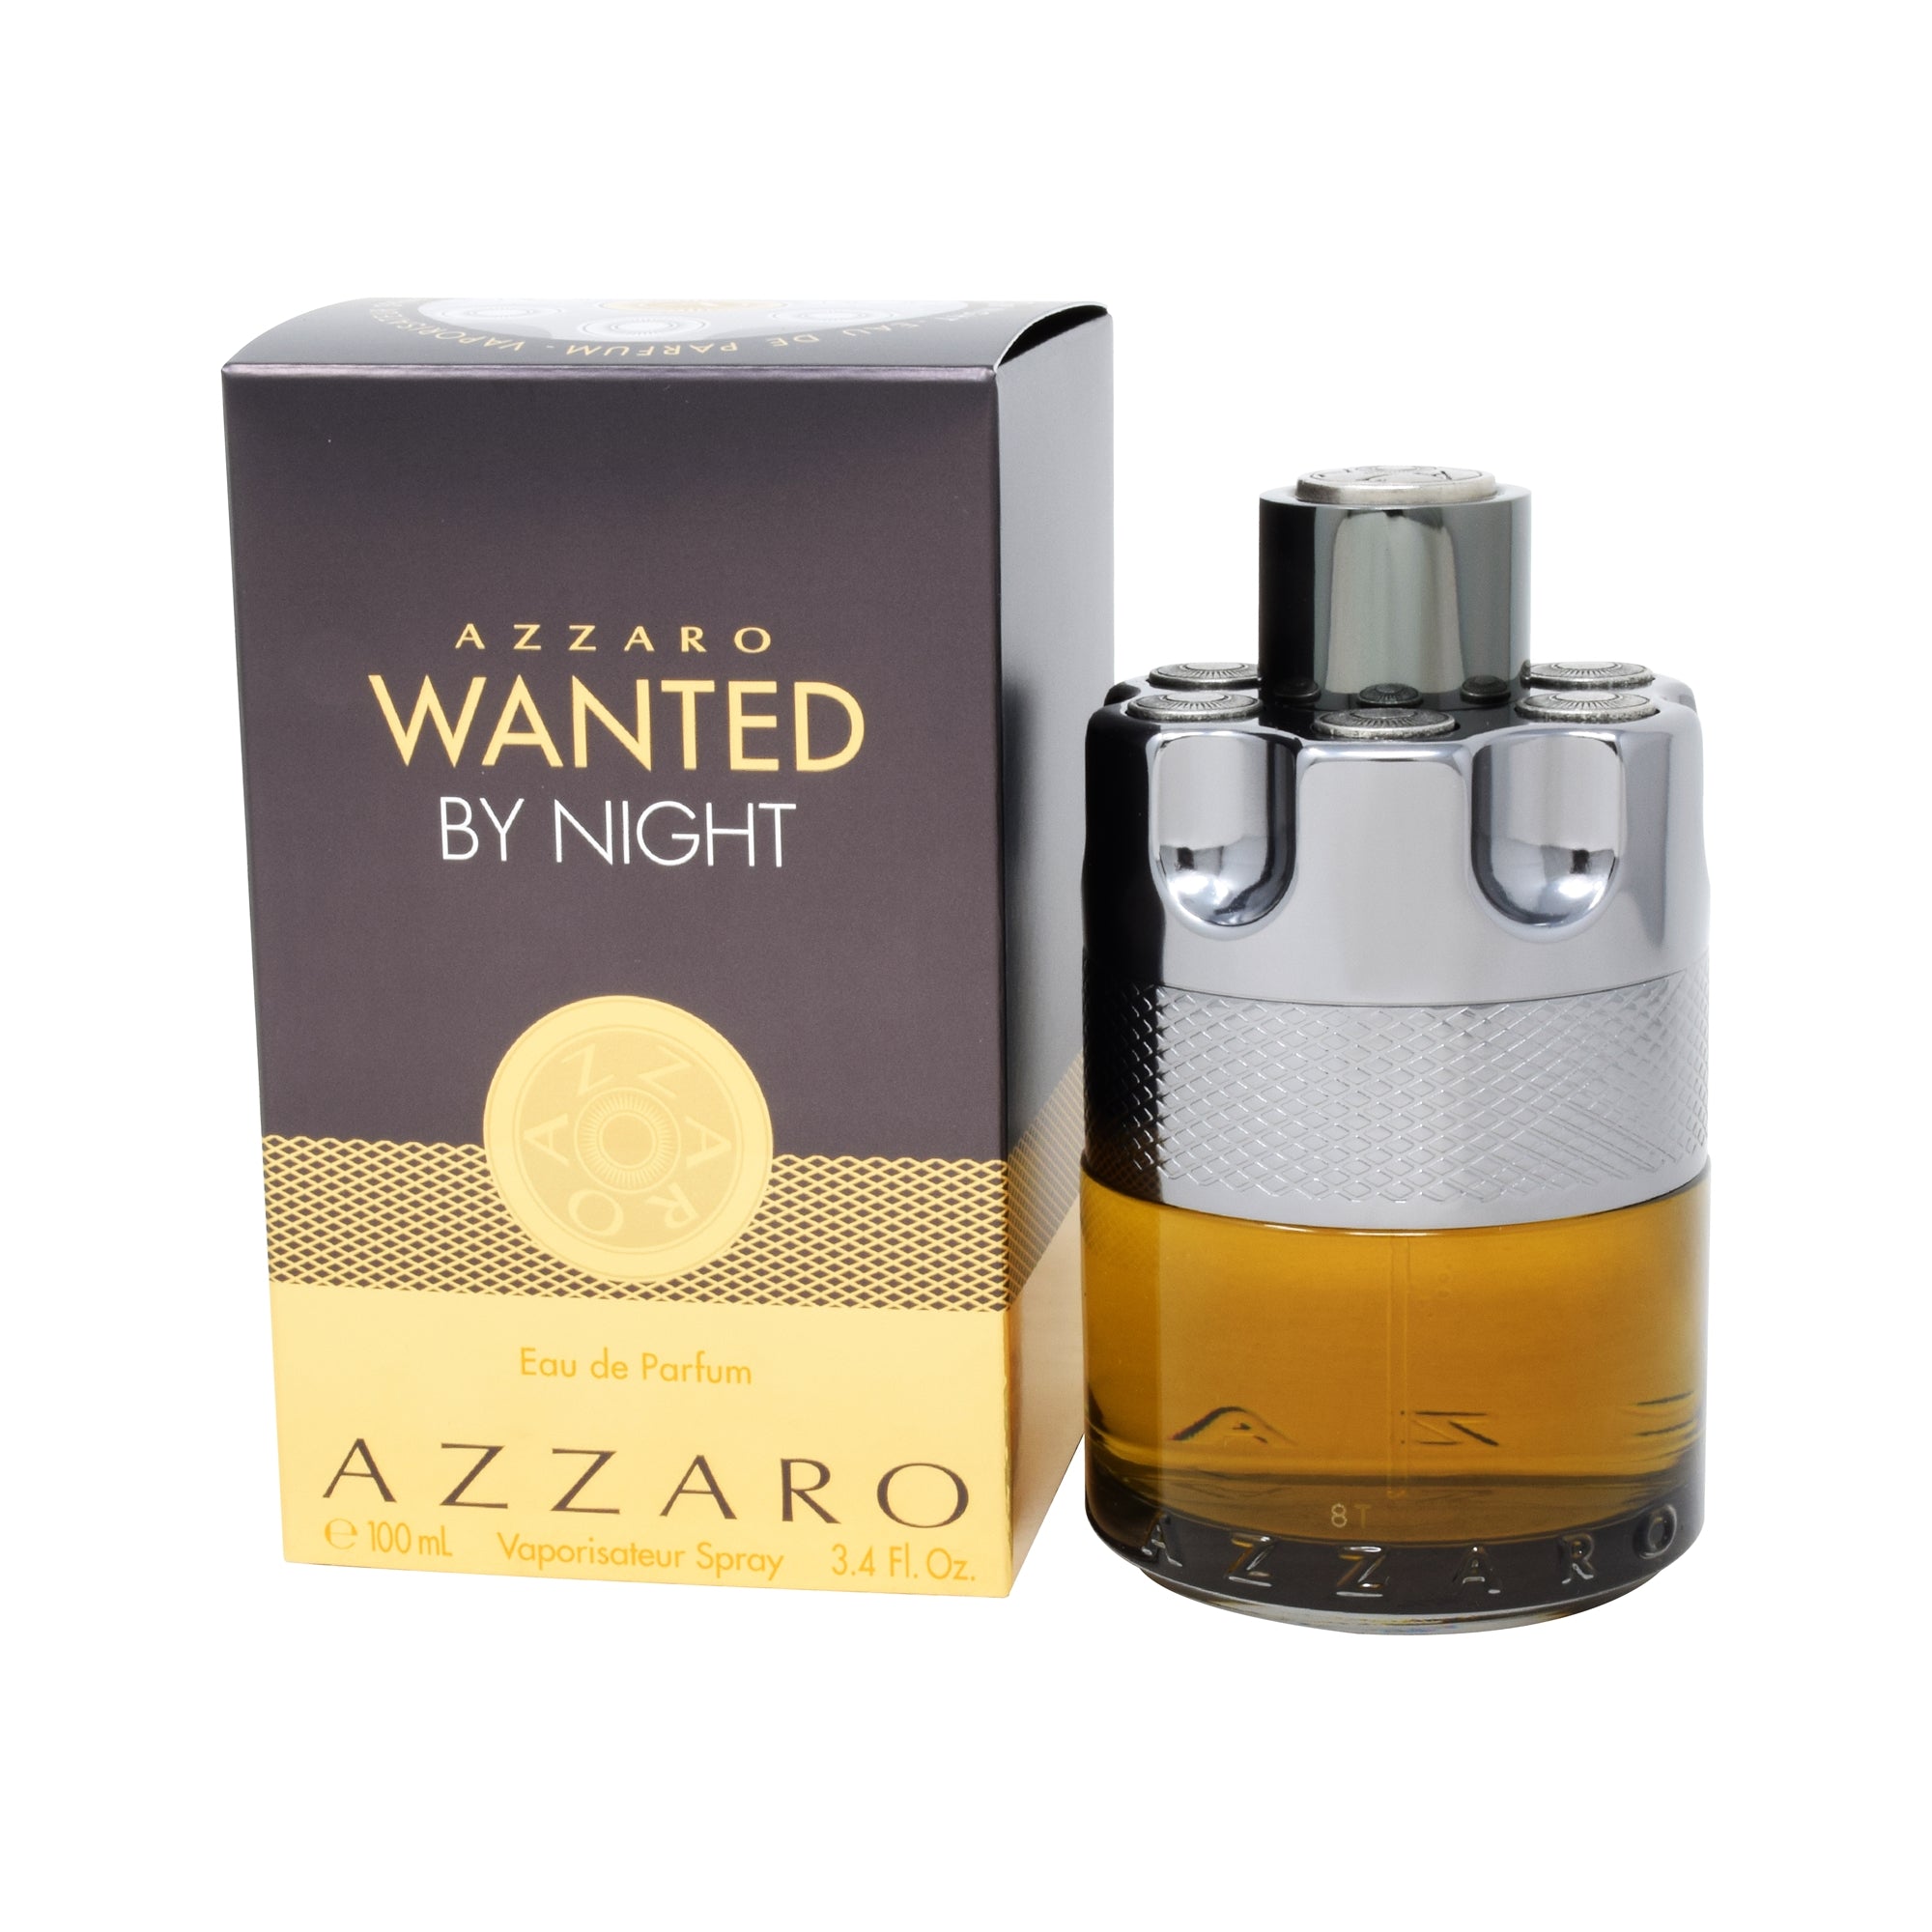 AZZARO WANTED BY NIGHT